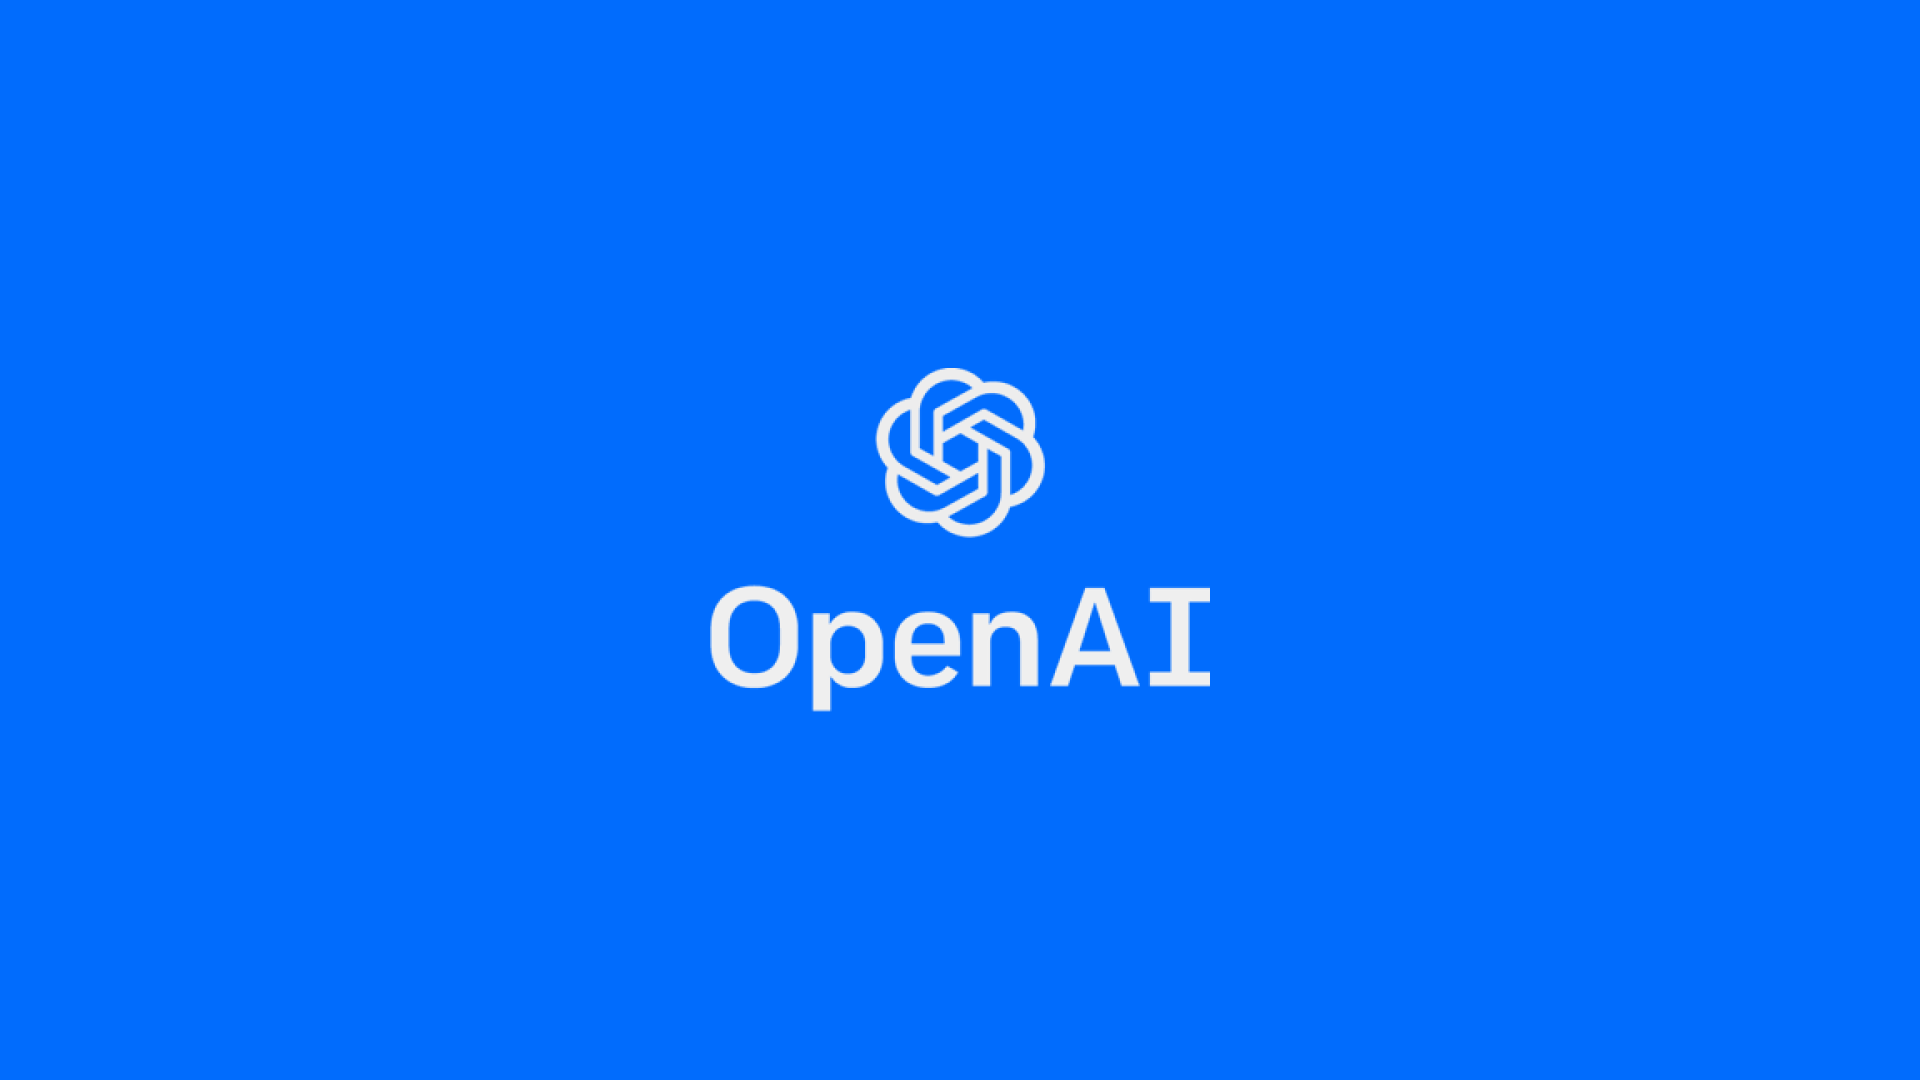 The logo of ChatGPT-creator OpenAI